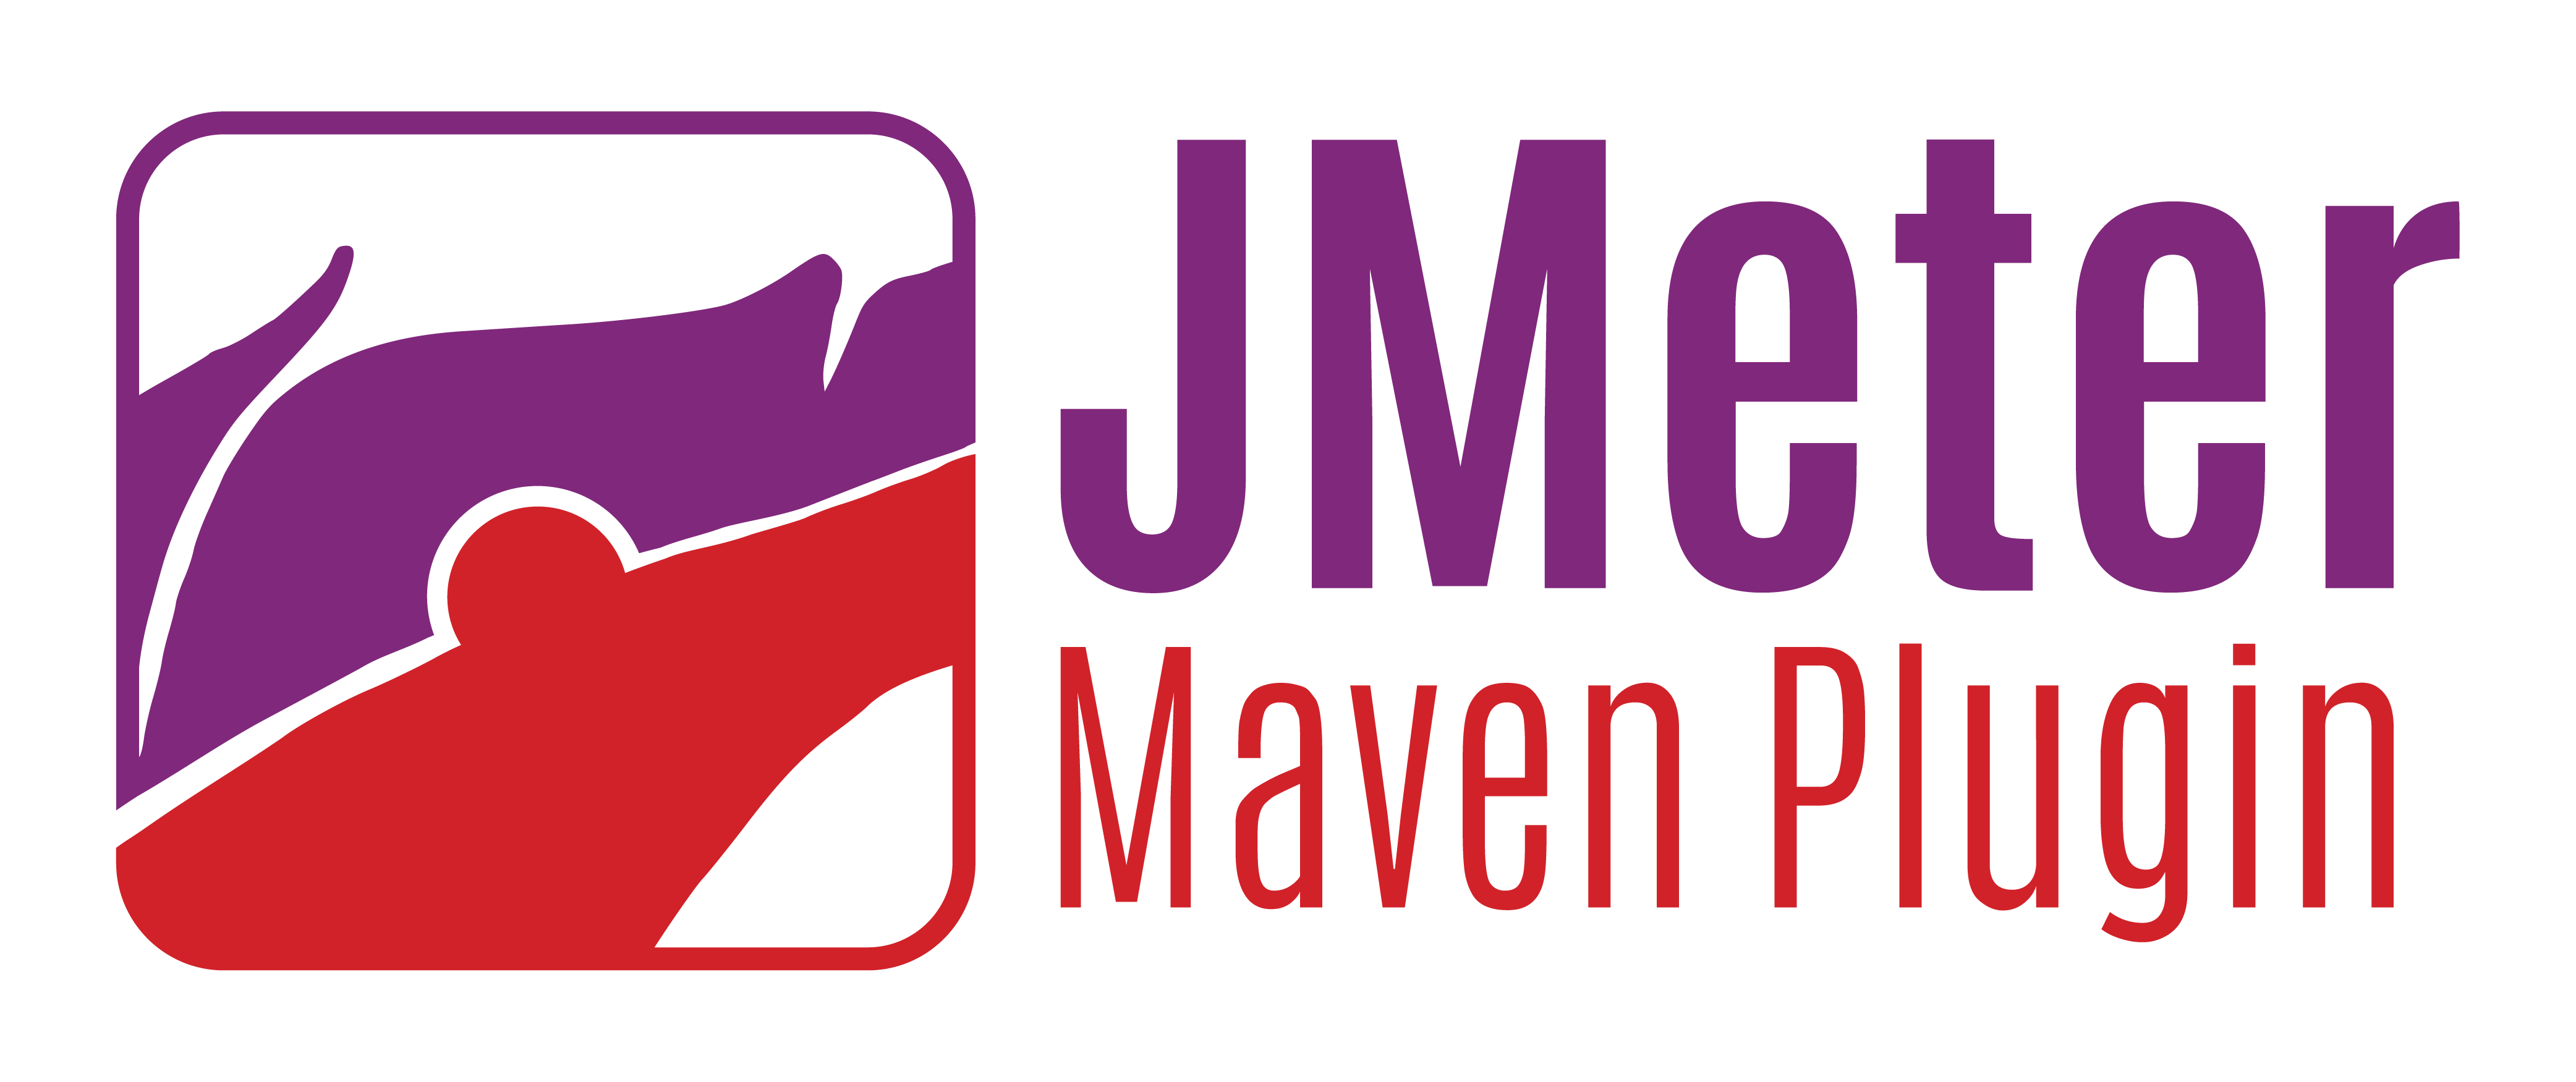 JMeter Maven Plugin